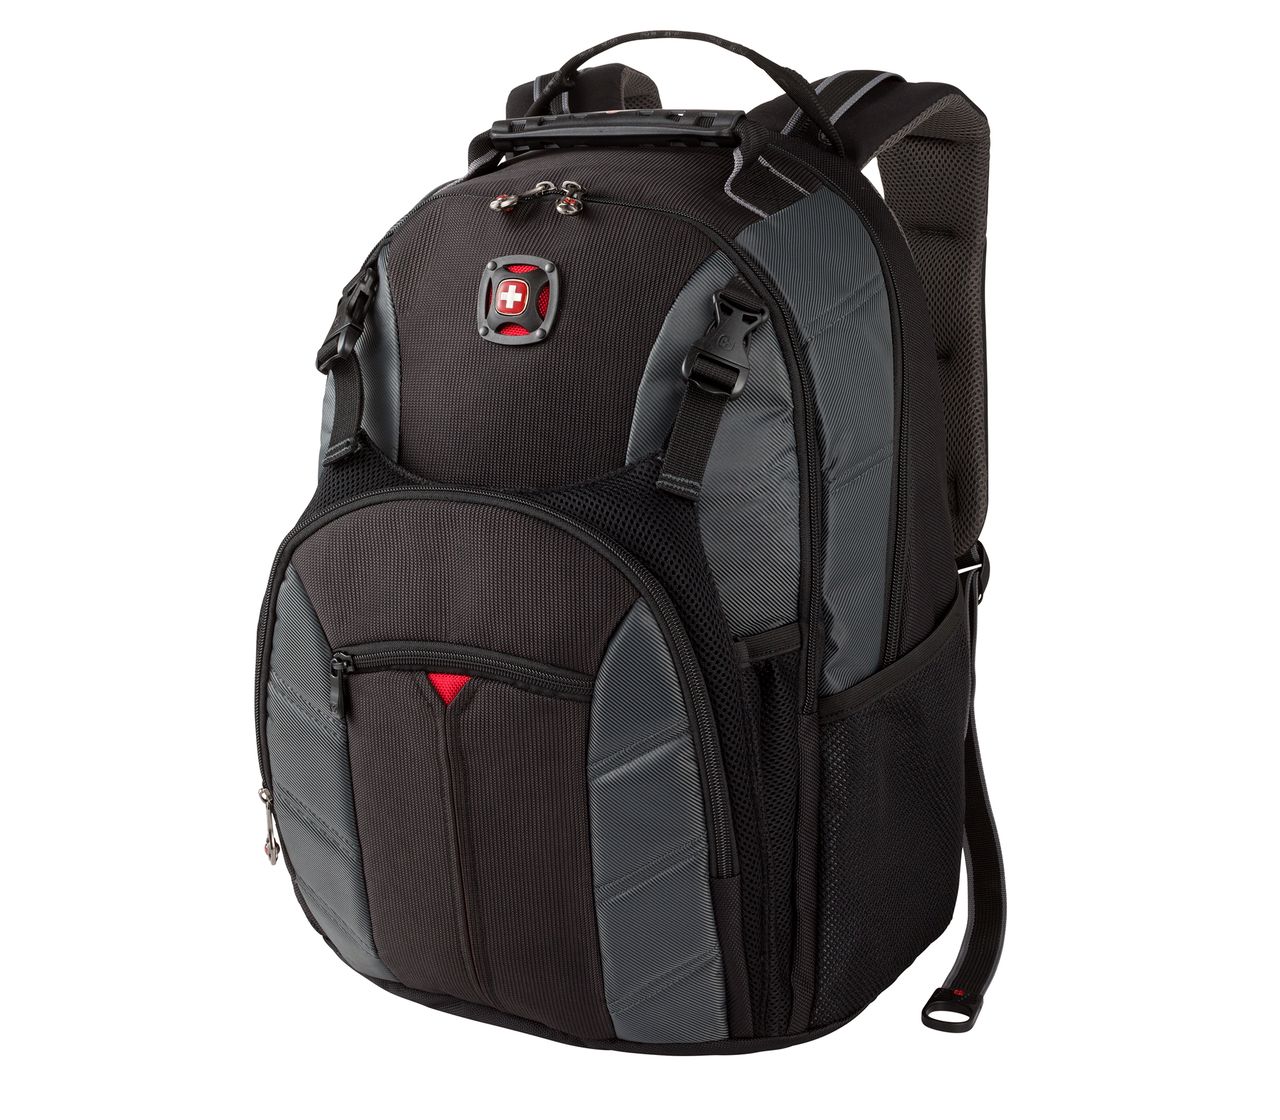 Wenger Sherpa 16'' Laptop Backpack in black / gray - 27338090